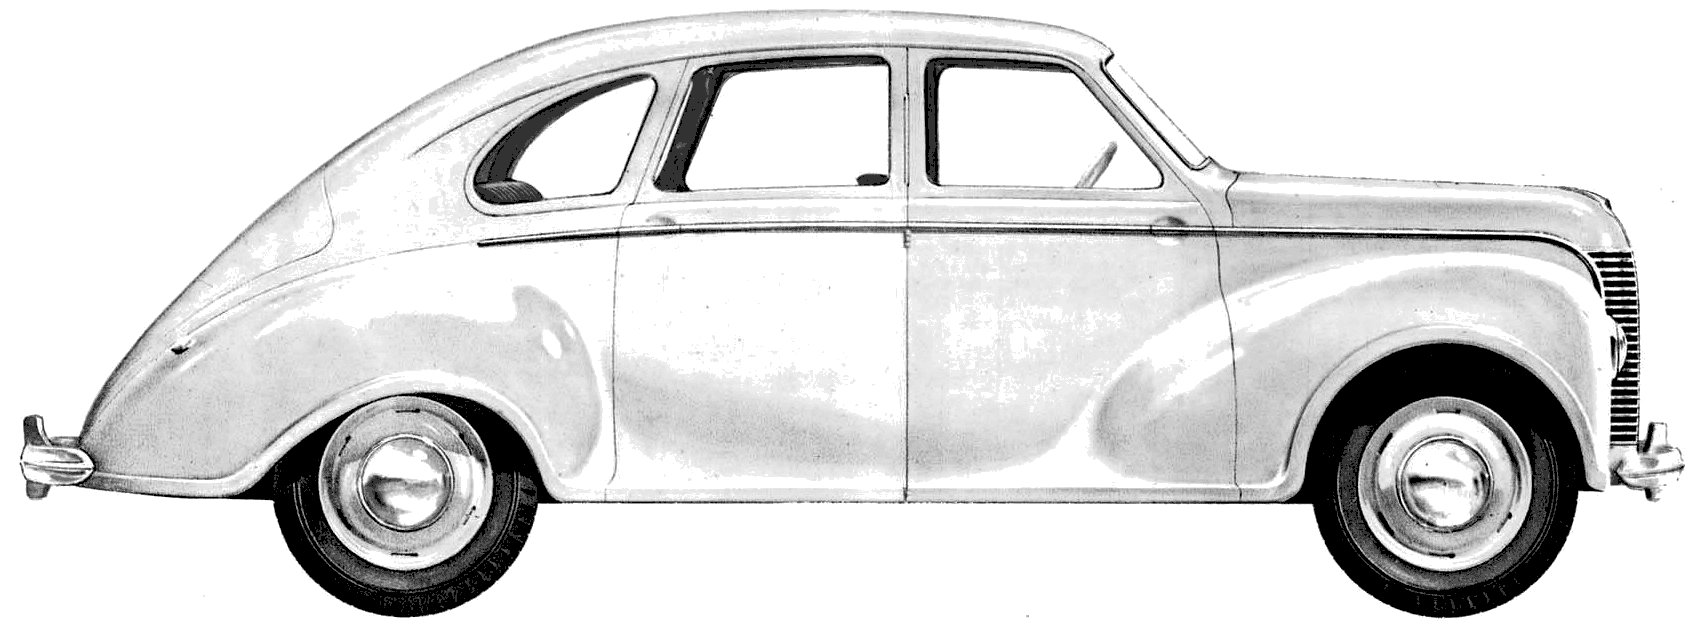 CAR blueprints - 1948 Jowett Javelin Sedan blueprint